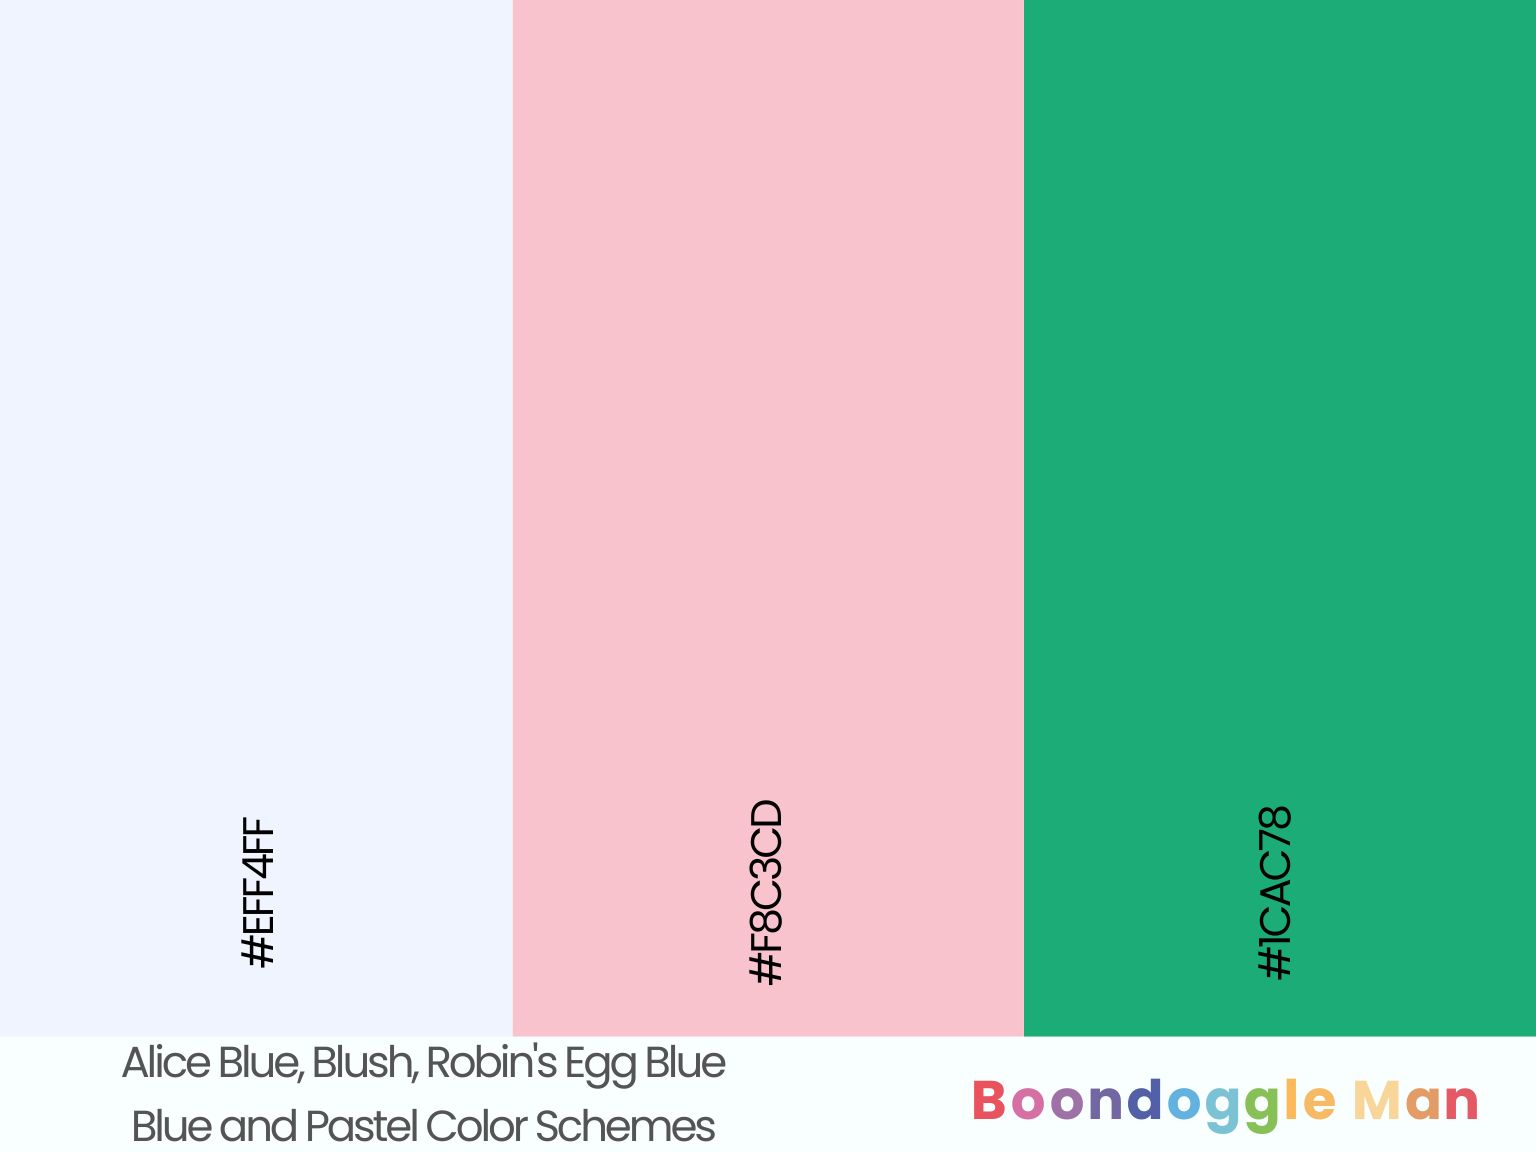 Alice Blue, Blush, Robin's Egg Blue